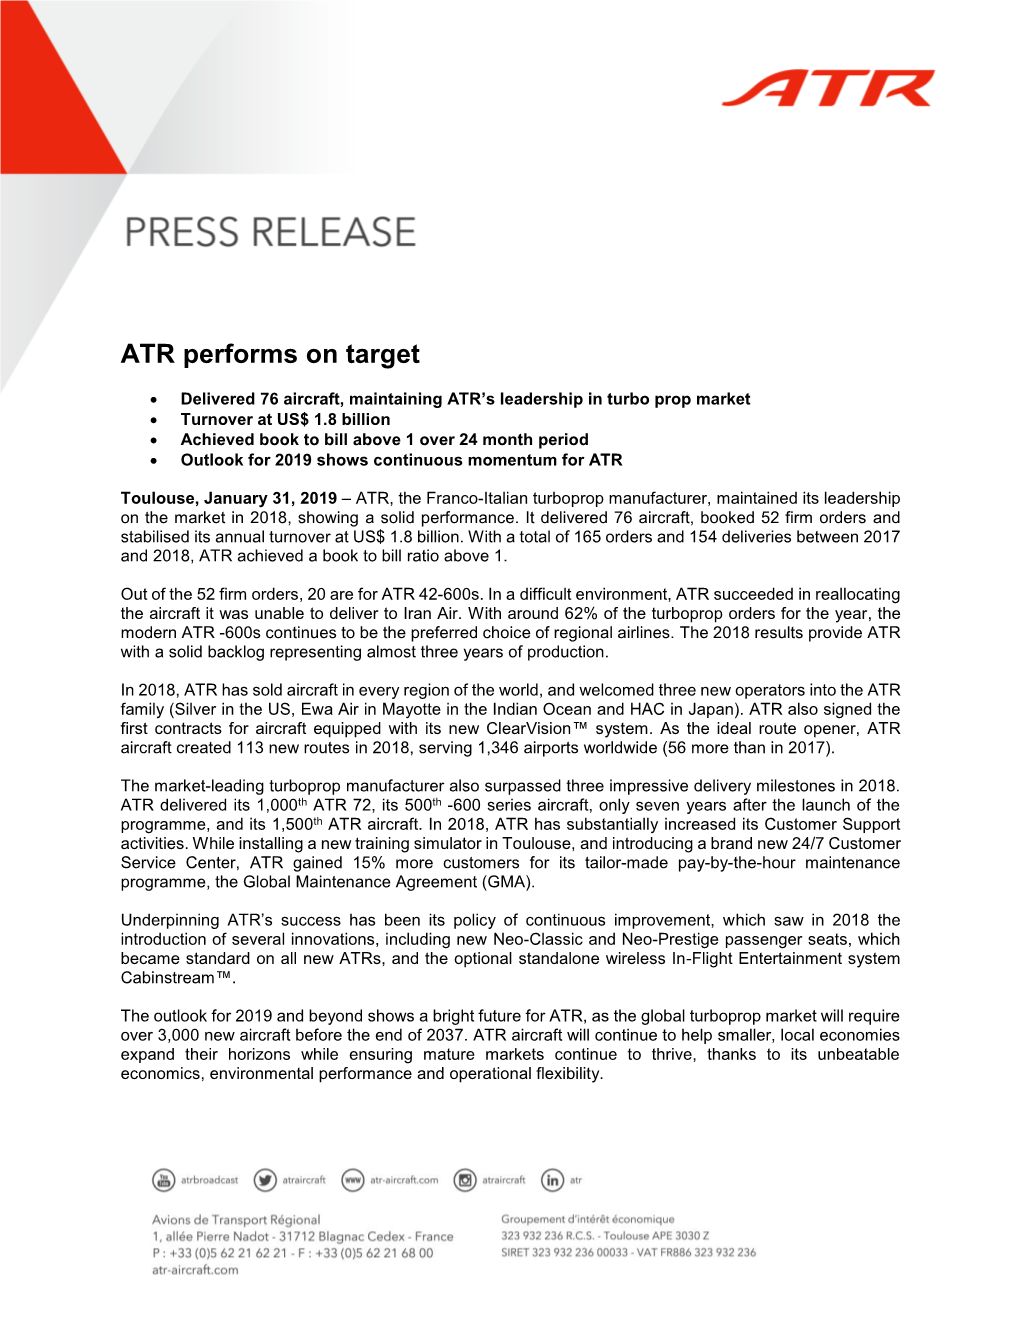 ATR Performs on Target